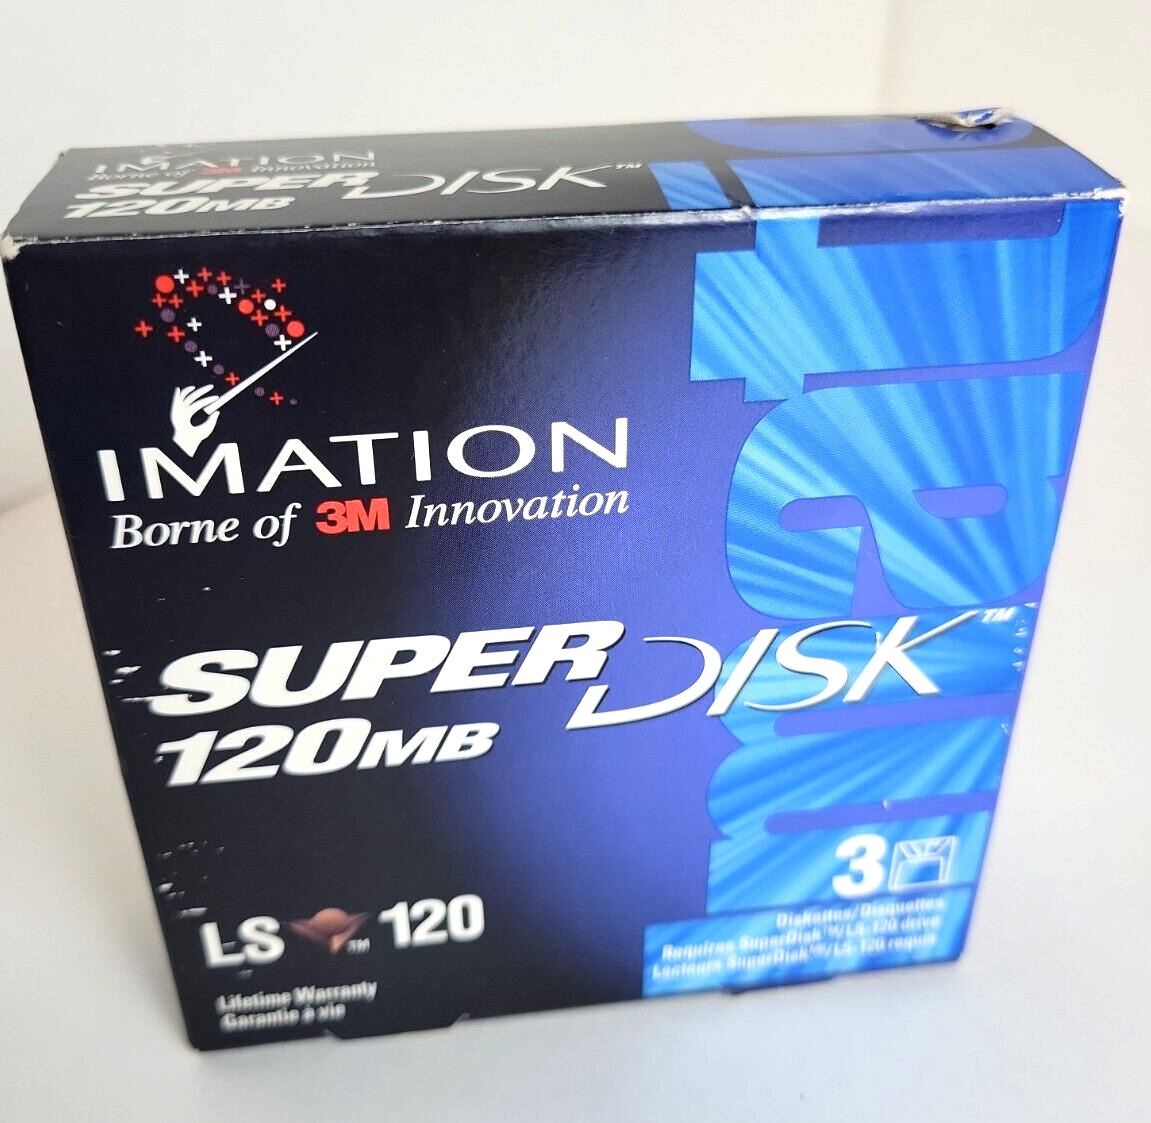 Imation® SuperDisk™ 120MB (3pk) LS-120 DISKETTES w/Jewel Cases - New & Sealed